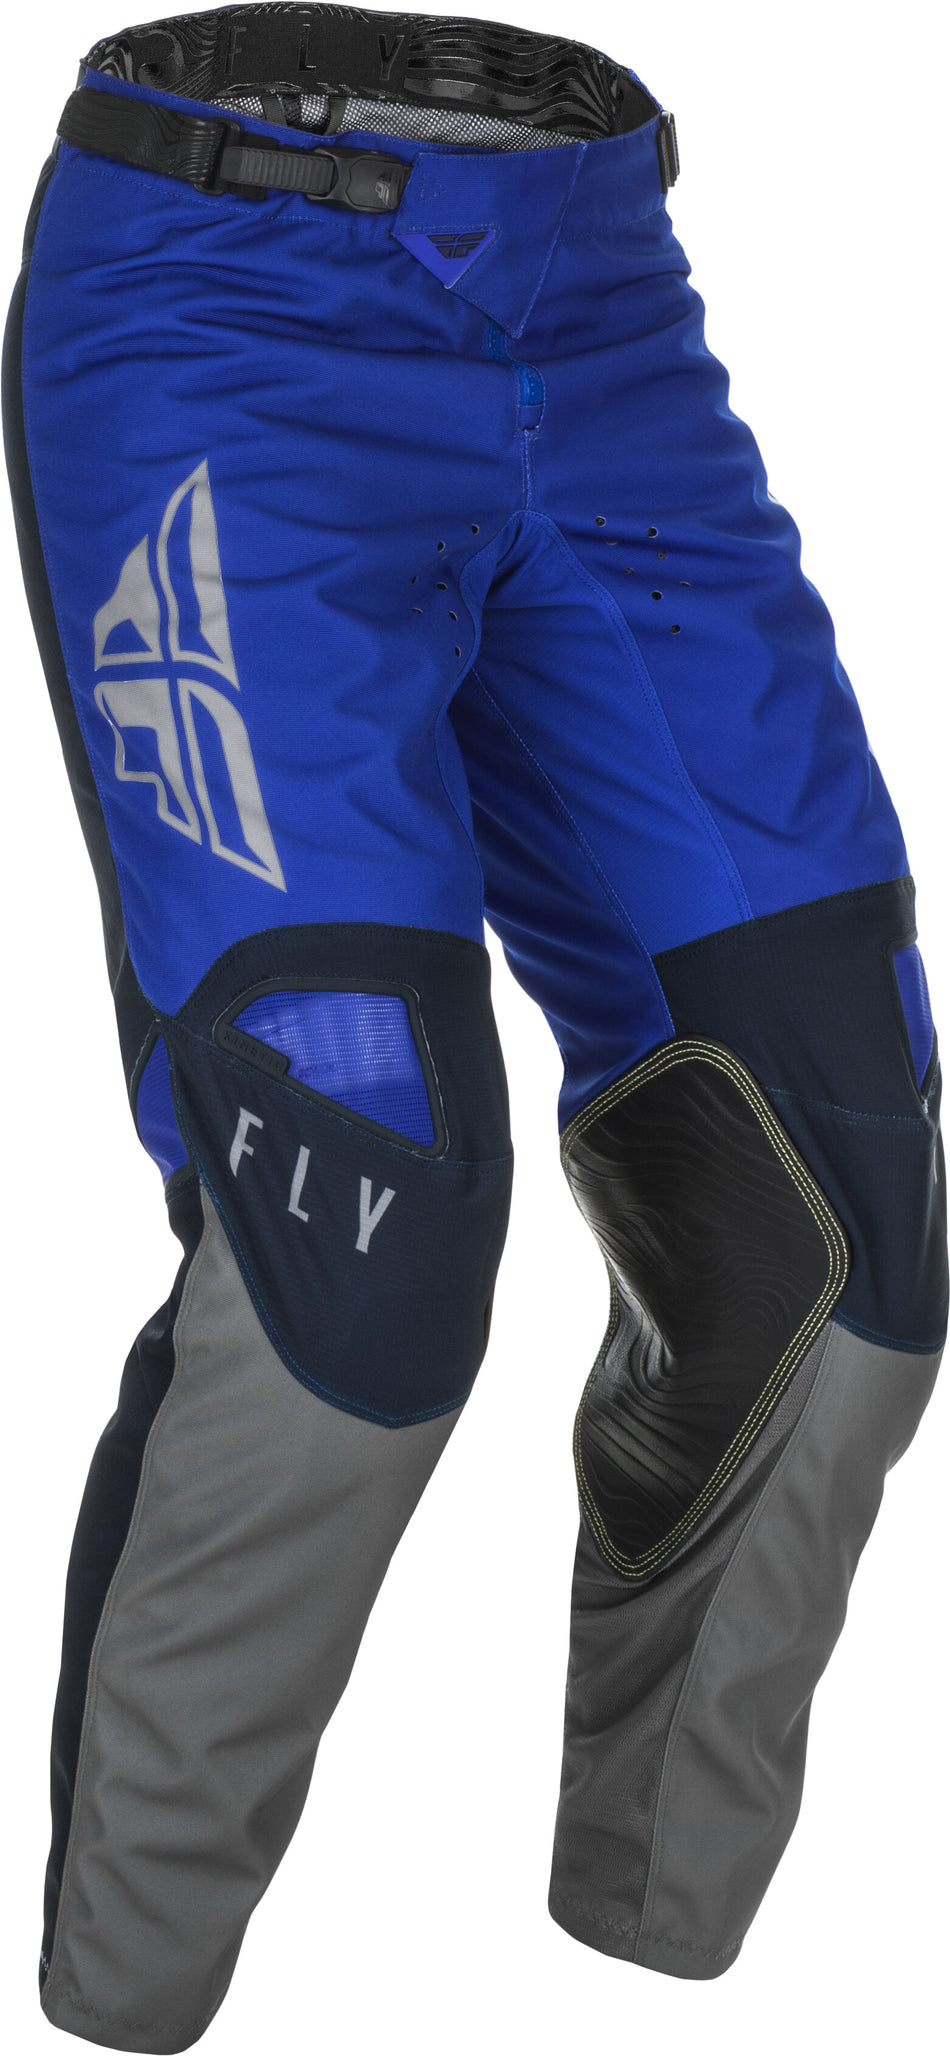 FLY RACING Kinetic K121 Pants Blue/Navy/Grey Sz 30 374-43130